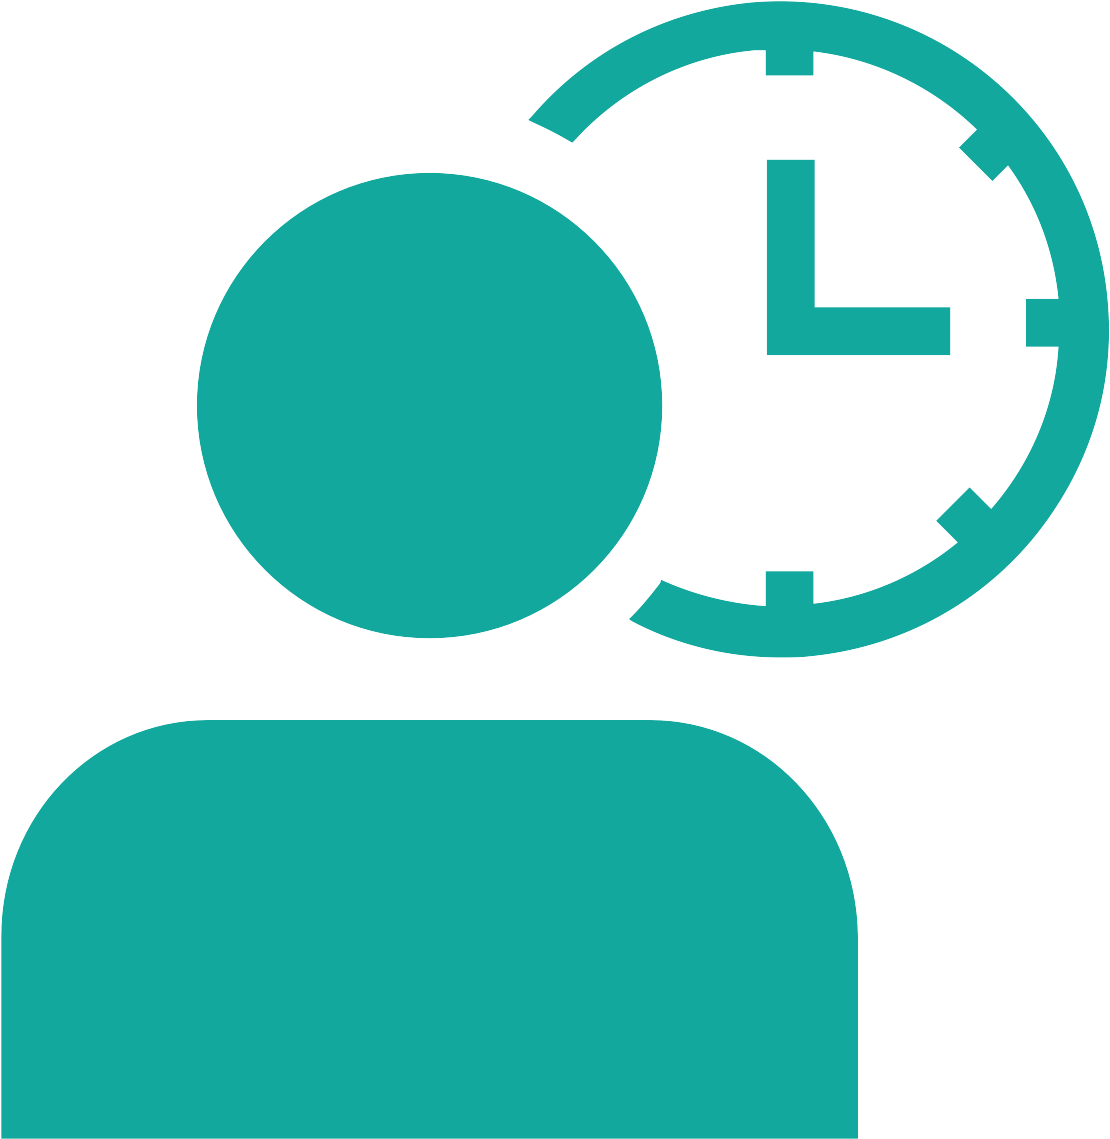 Sample Employee Timesheet With Lobbying Hours - Crosshair (1200x1200)